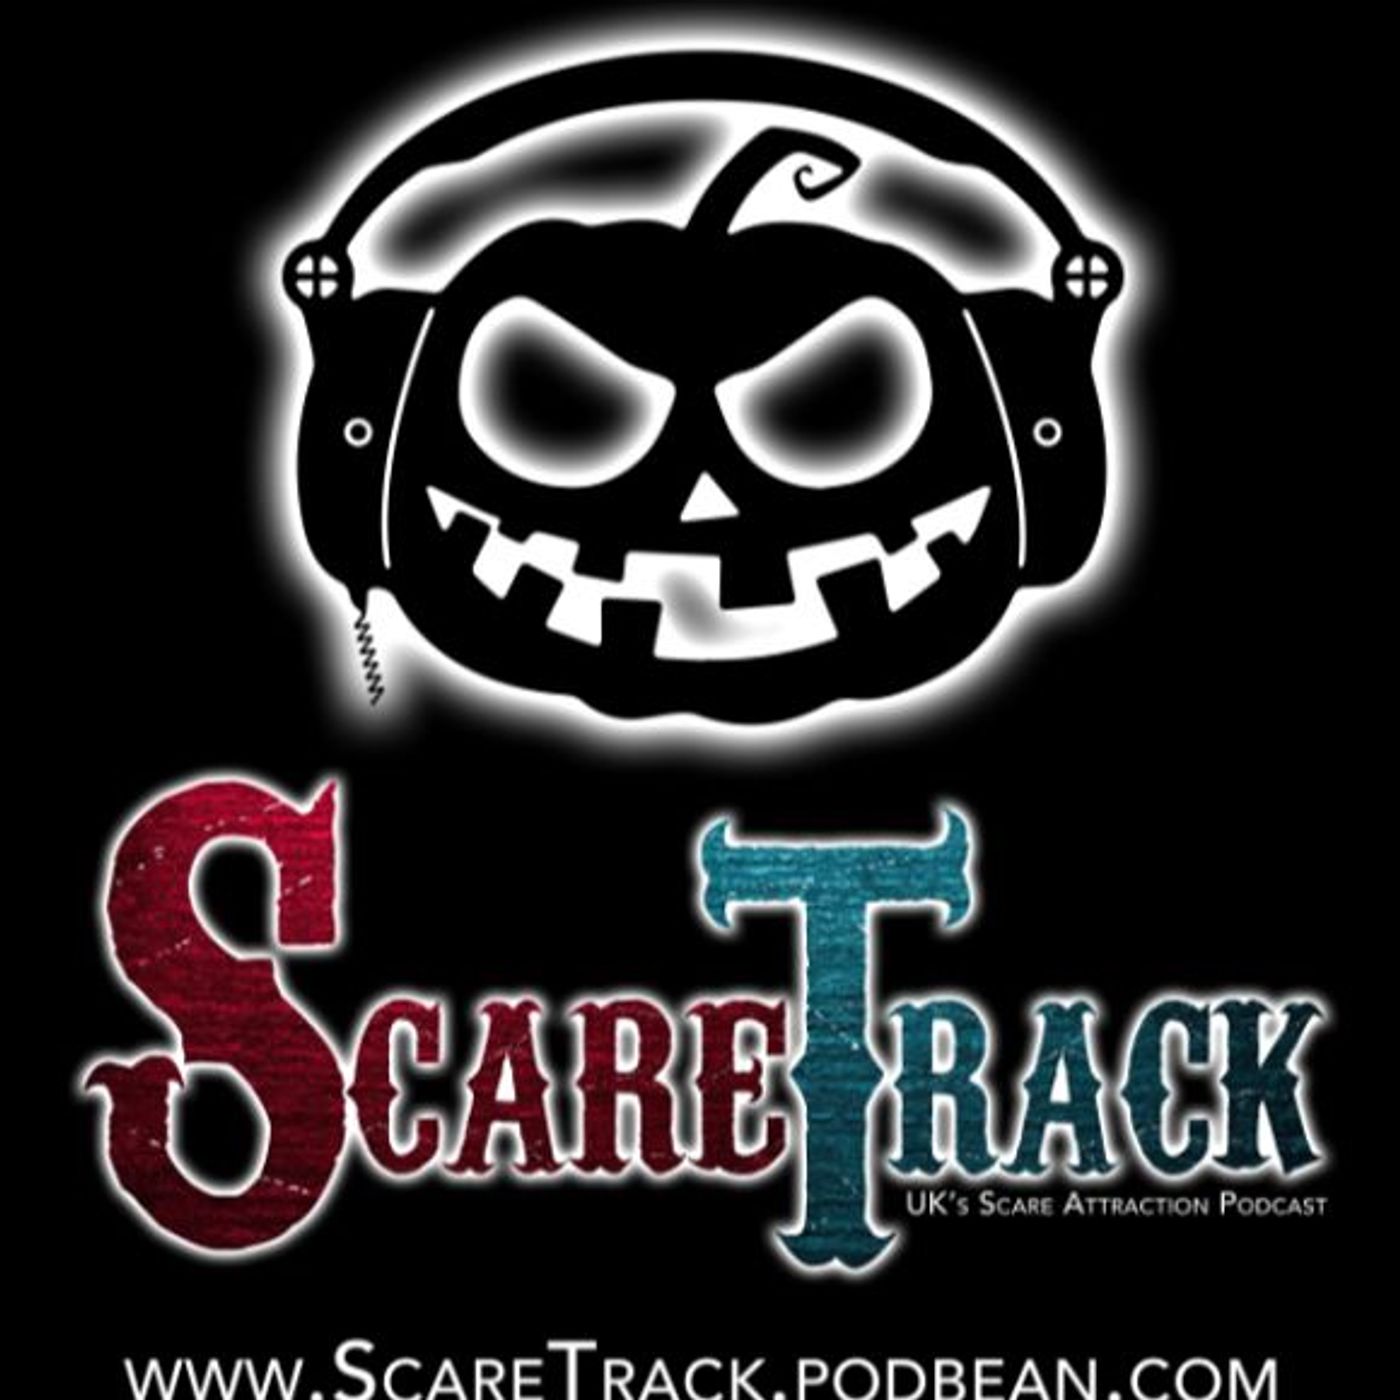 [ScareTrack] The Creators of Evac Scare Attraction - Returning for 2019 Halloween